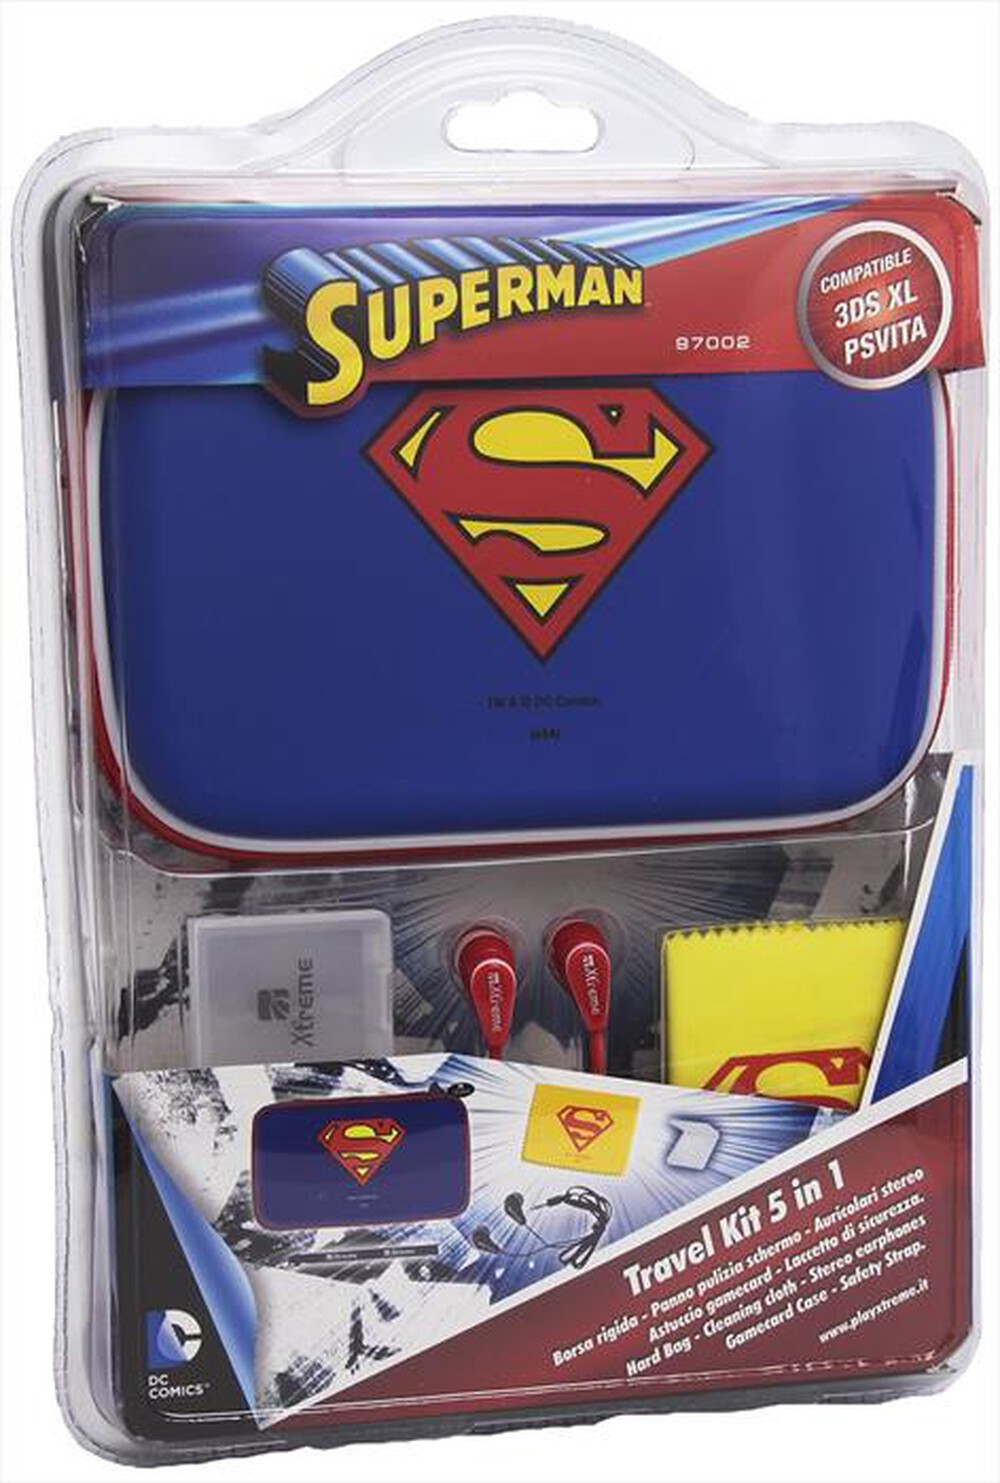 "XTREME - 97002 - Kit 5 in 1 Superman"